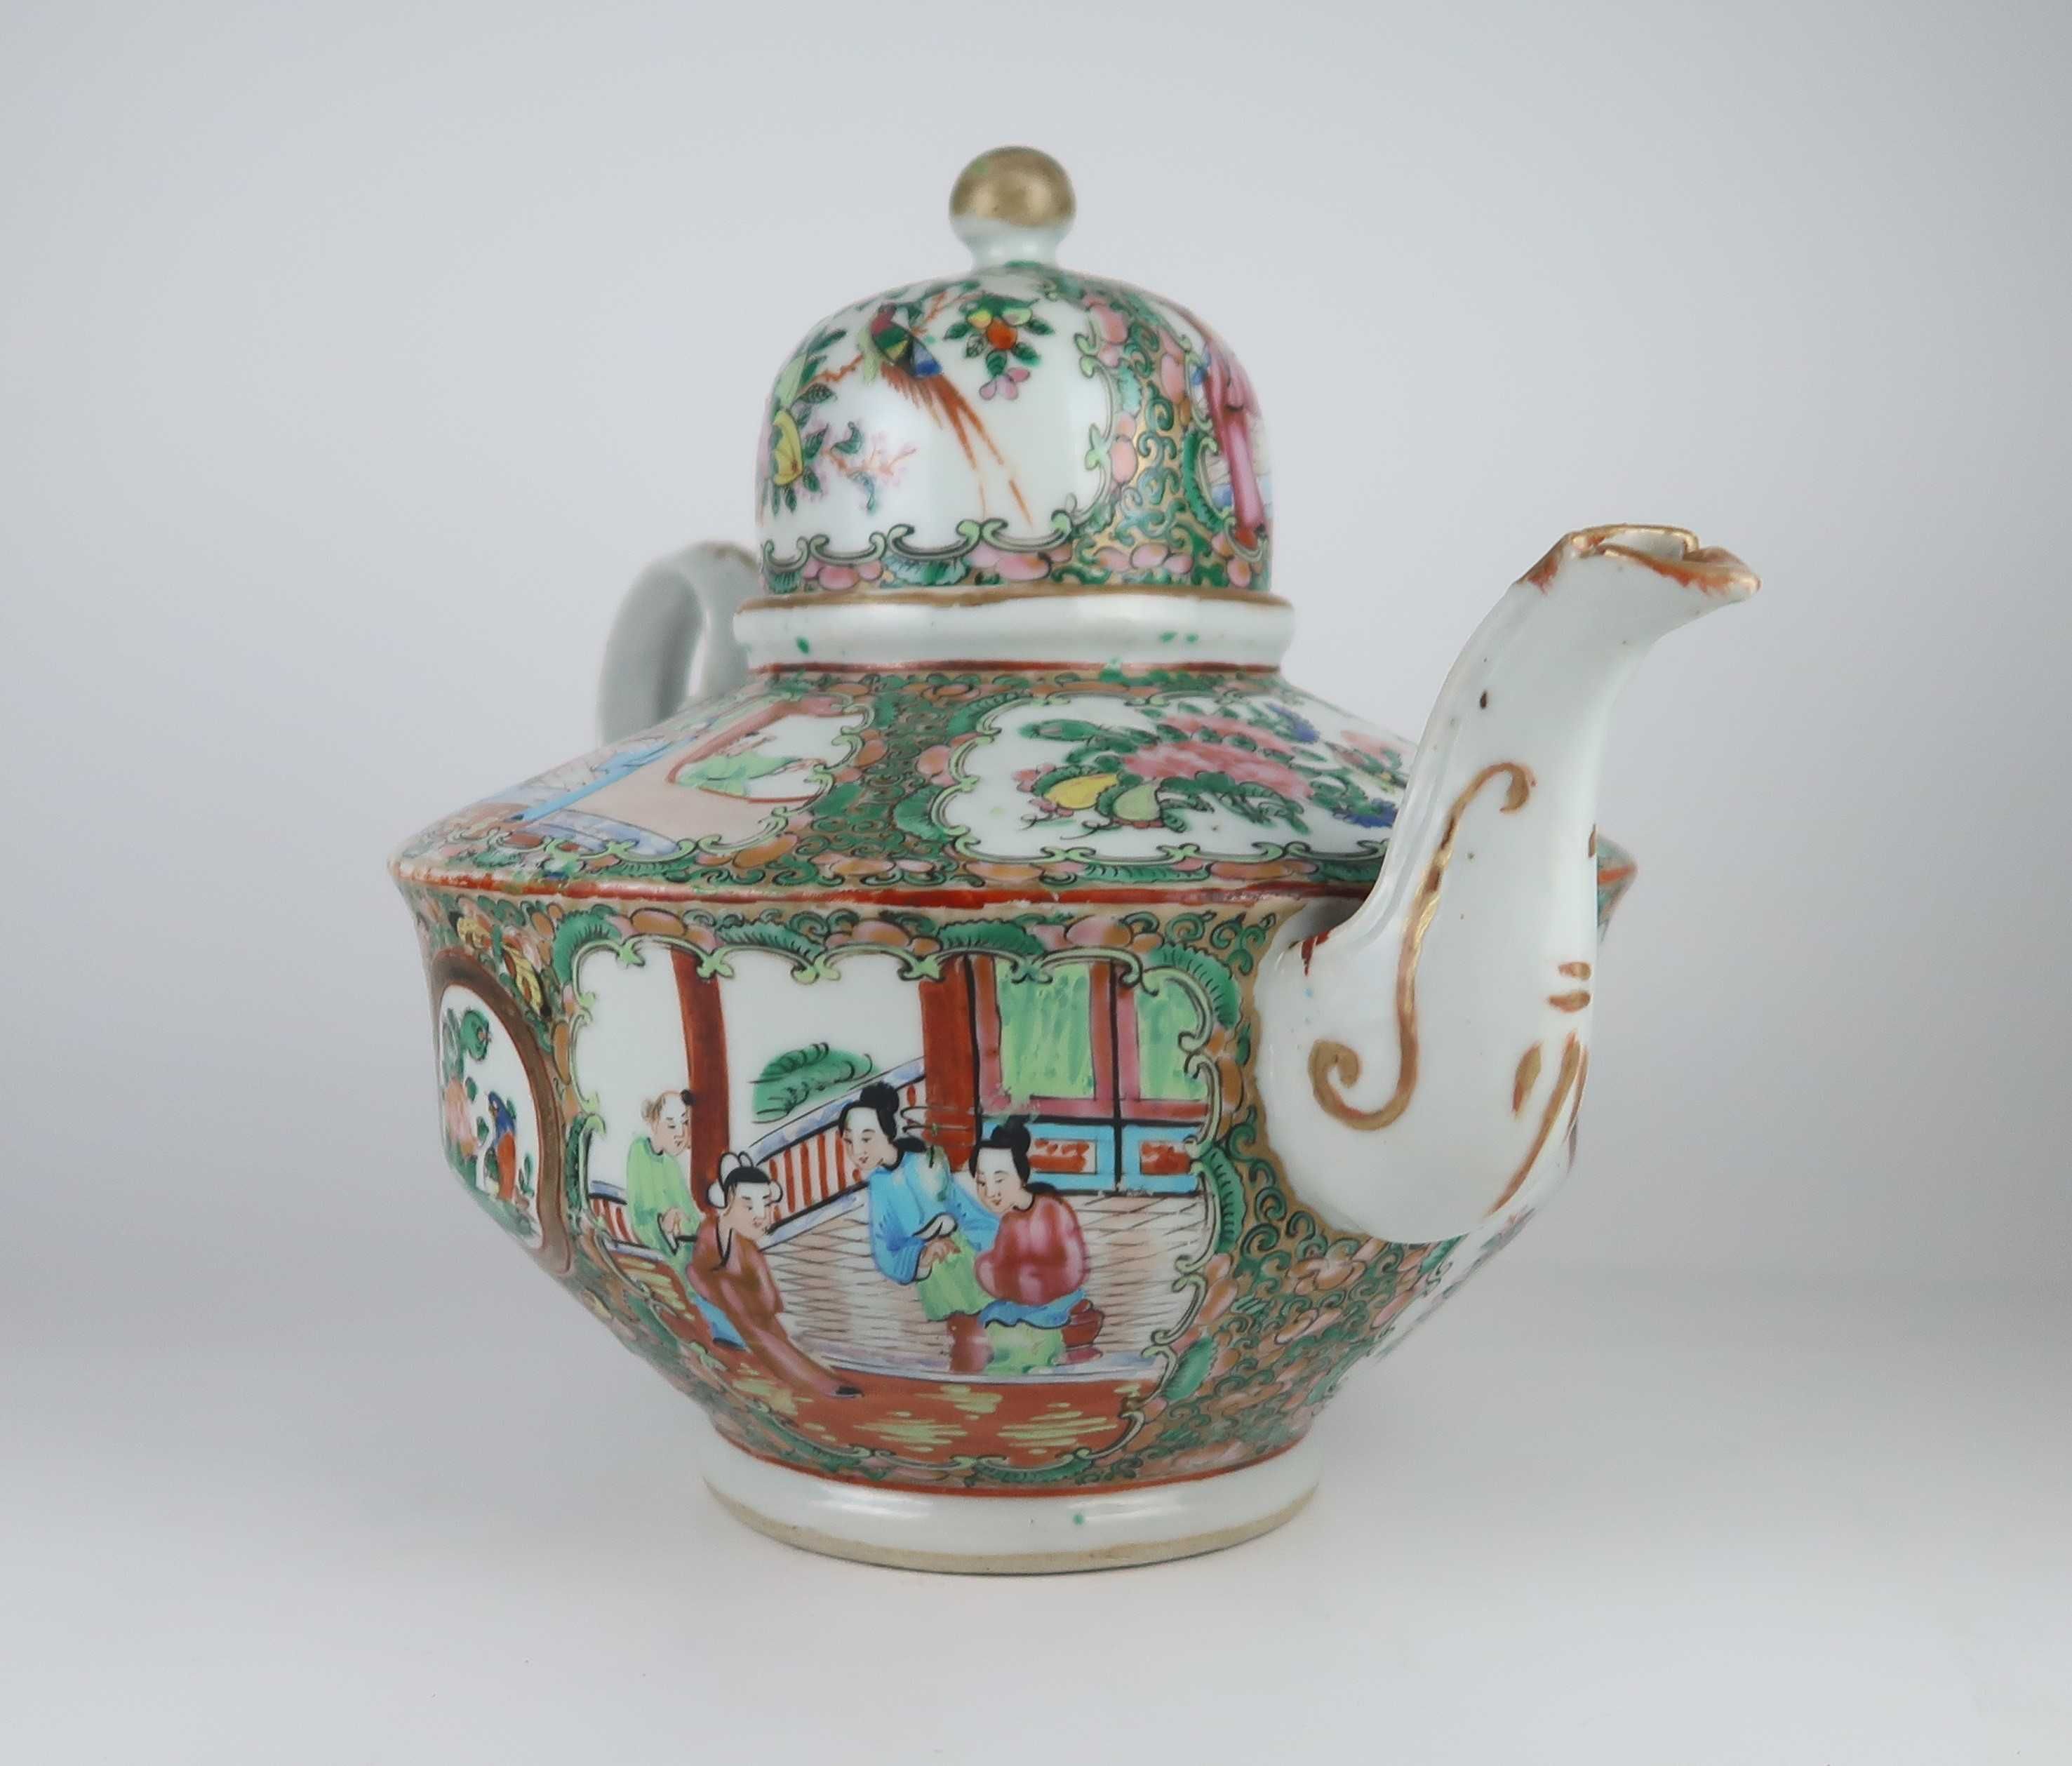 Grande Bule Porcelana da China Séc. XIX